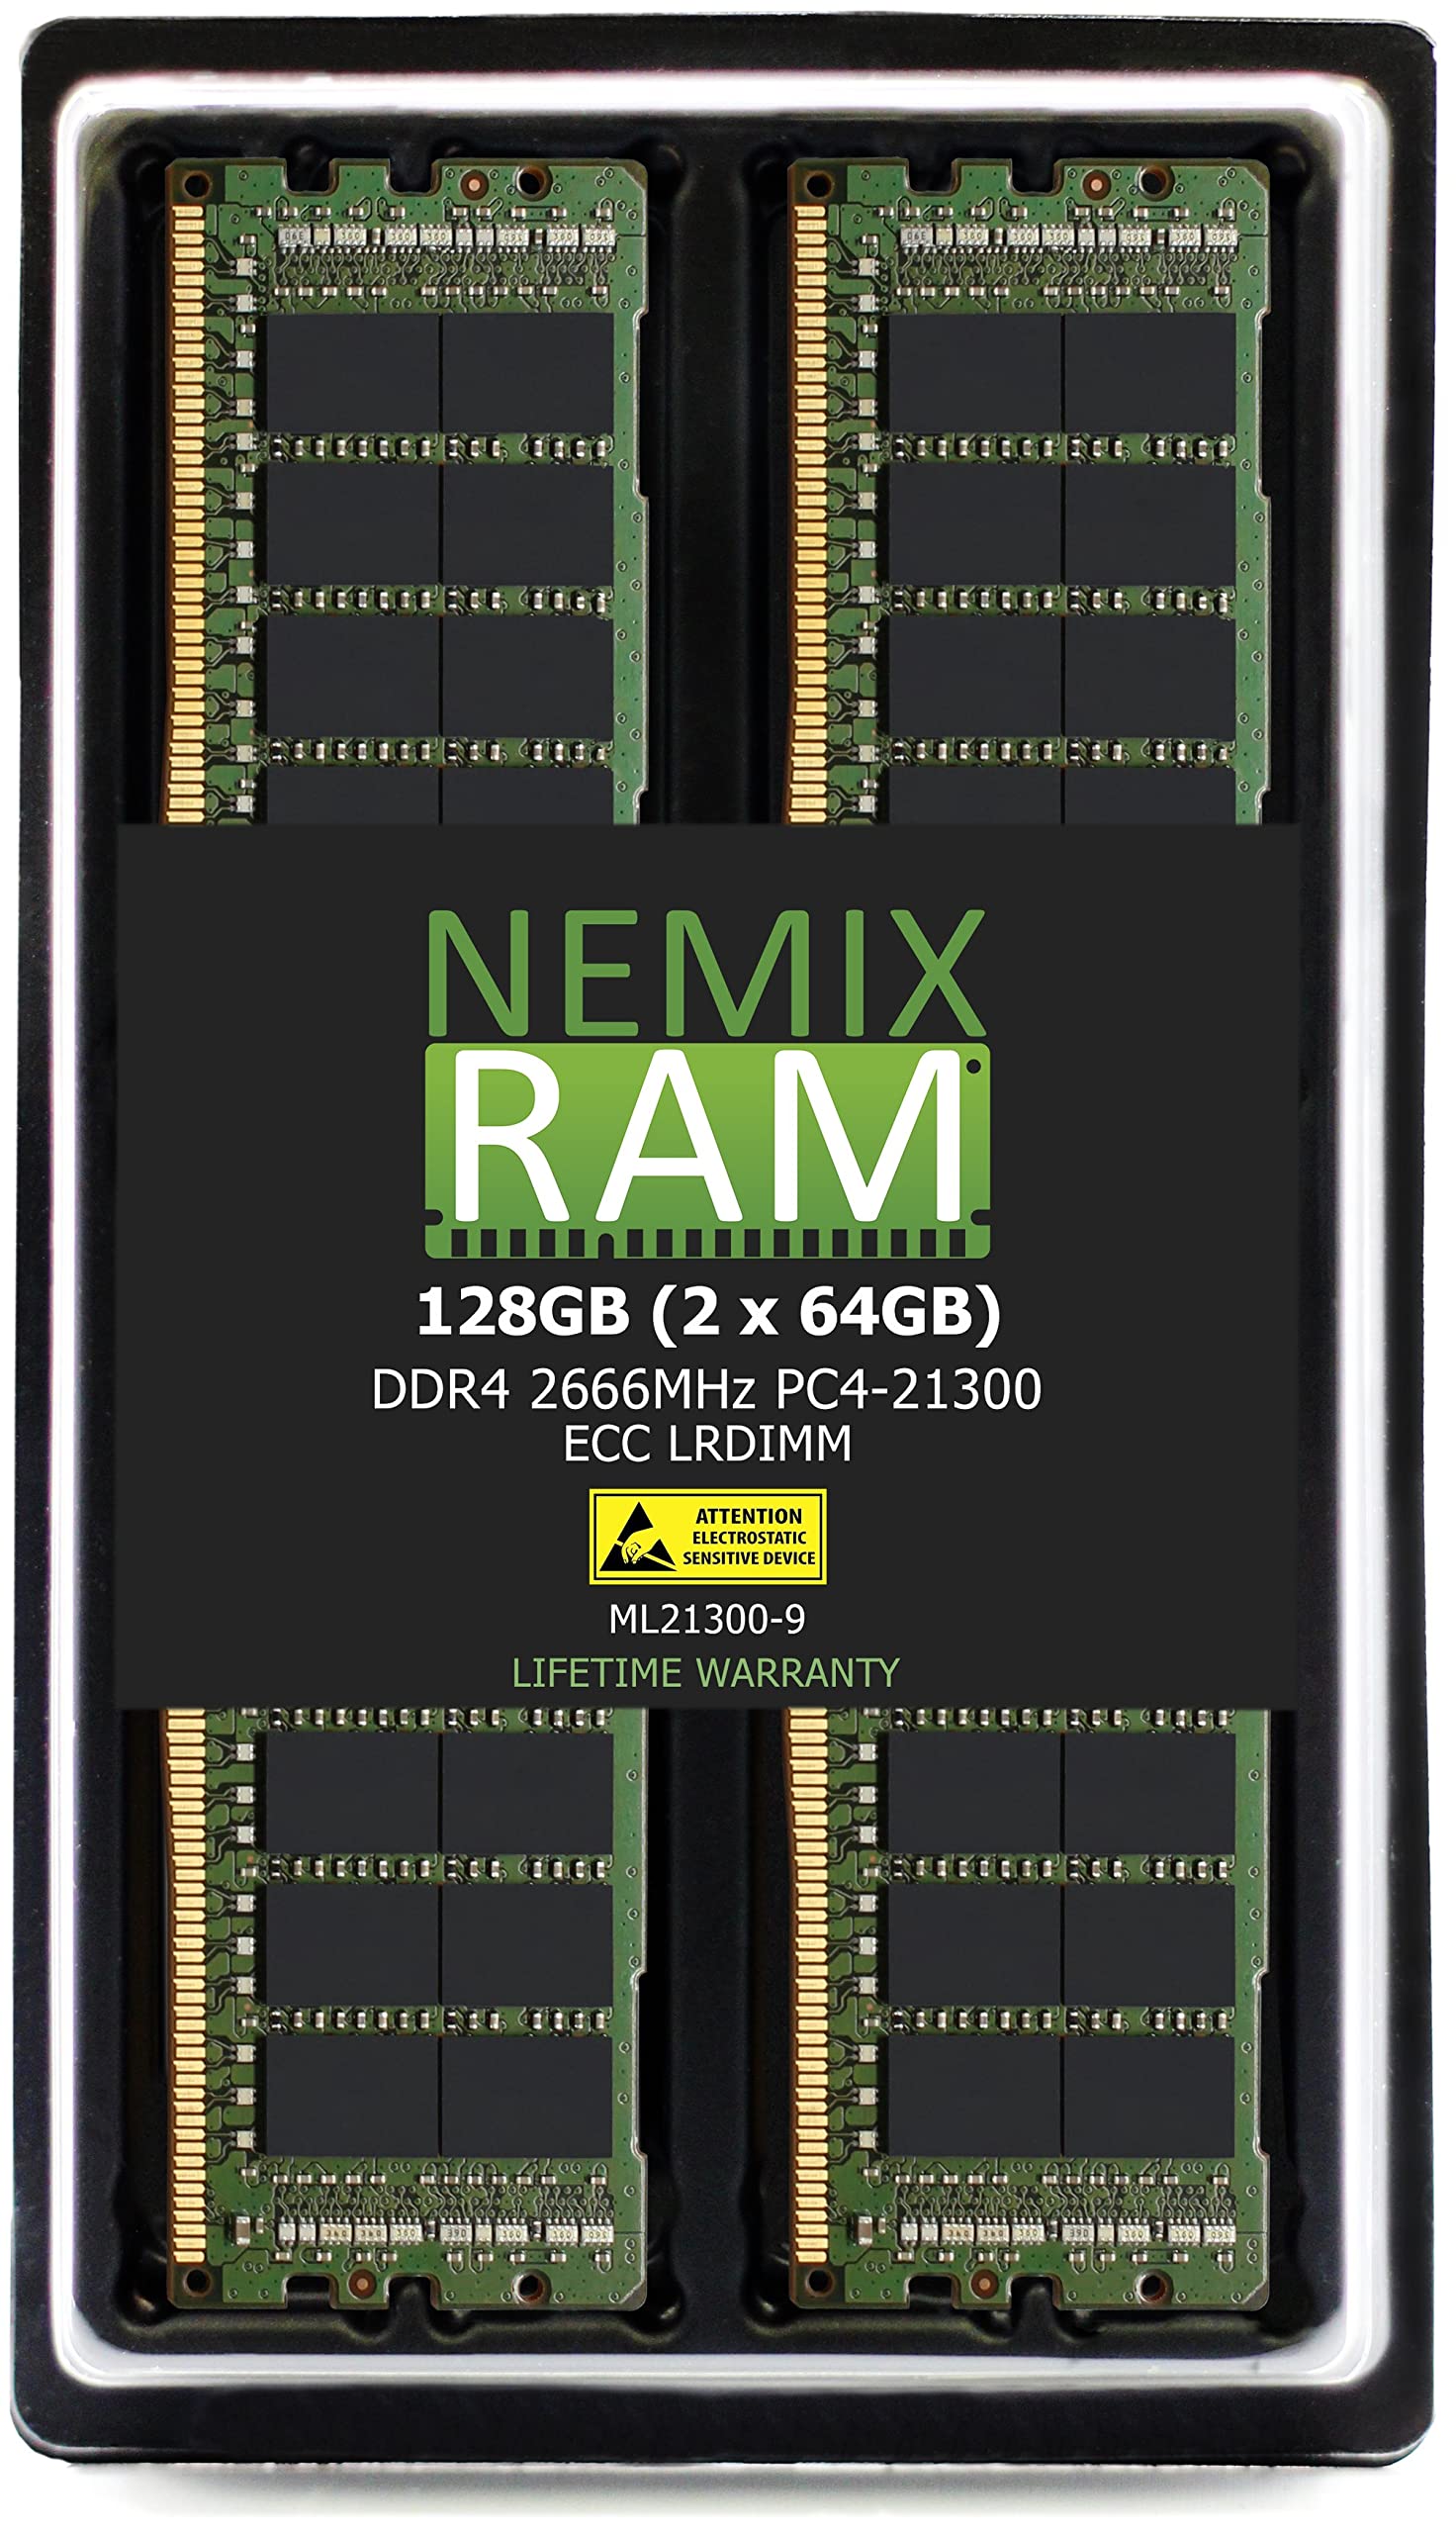 128GB 2x64GB DDR4-2666 LRDIMM 4Rx4 Memory for ASUS KNPA-U16 AMD EPYC 7000 Series by Nemix Ram